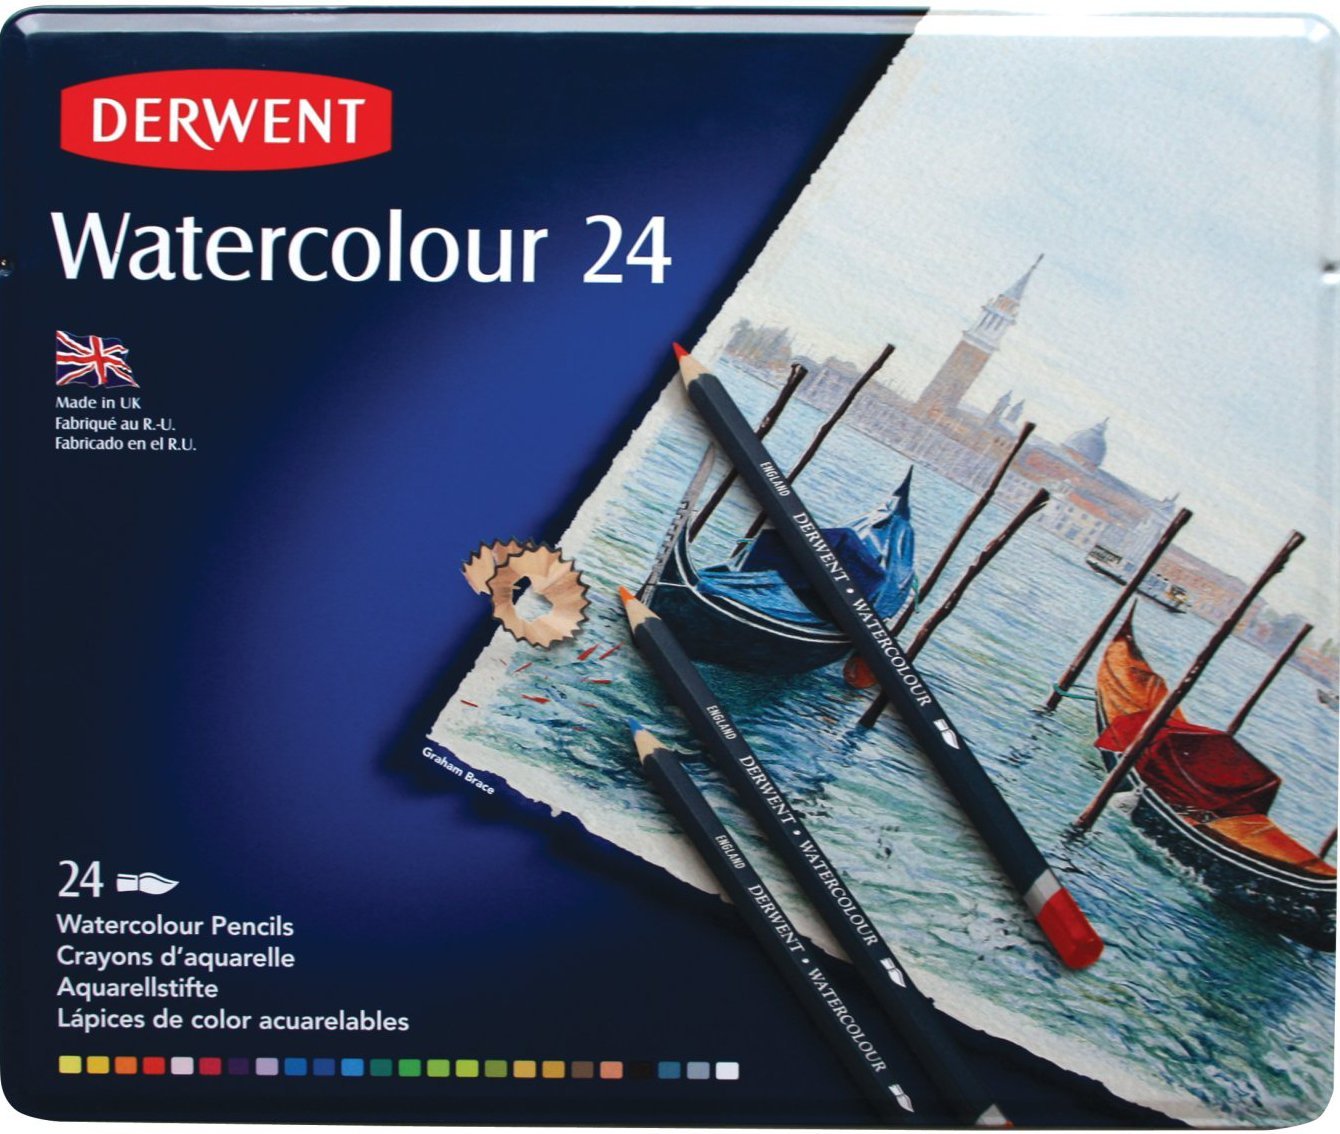 Derwent Inktense Watercolor Pencils Review